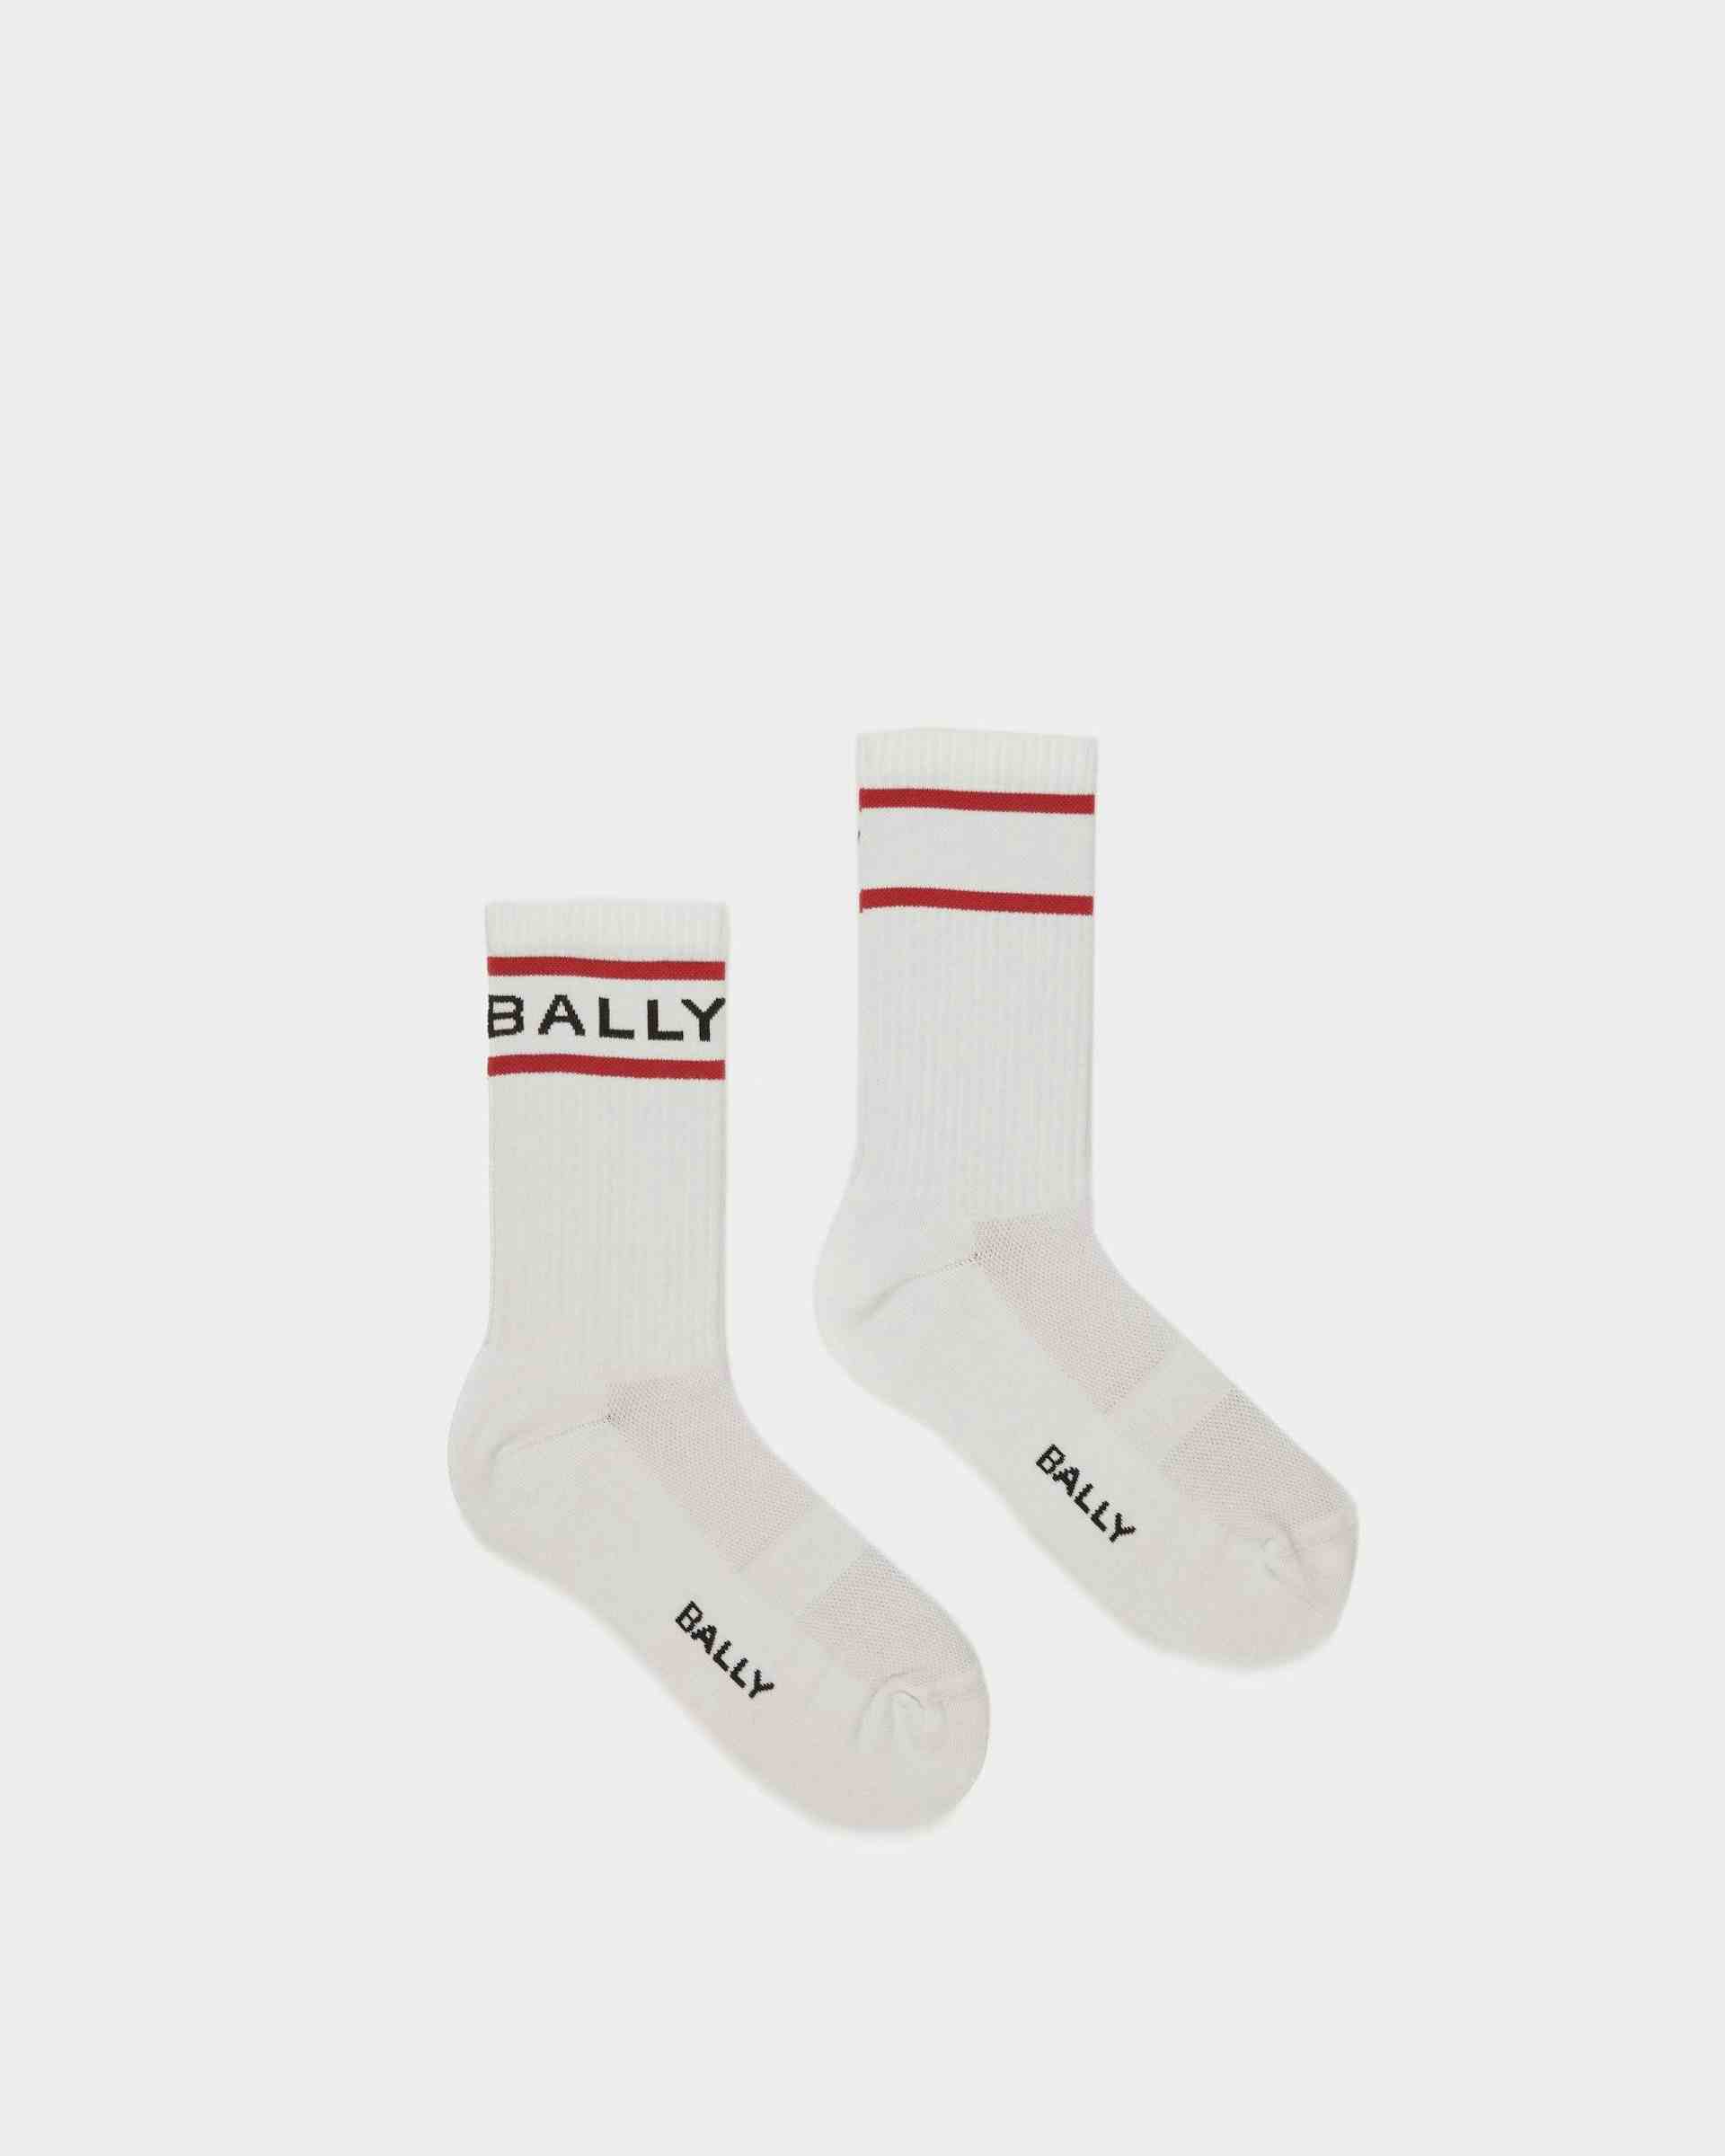 Calze Bally Stripe In Bianco E Rubino Scuro - Uomo - Bally